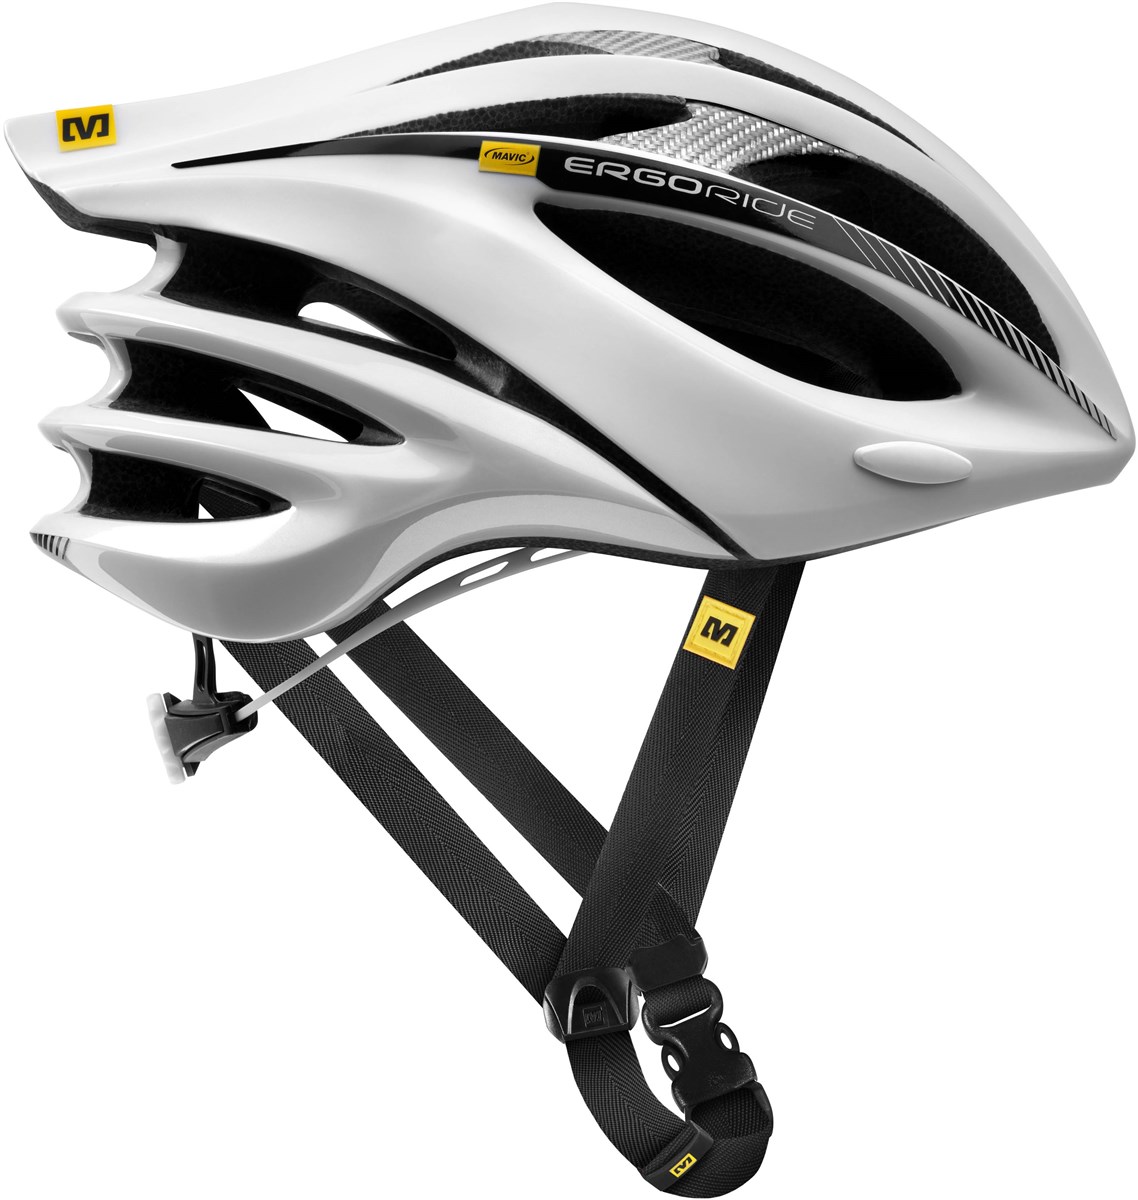 Mavic Plasma Road Cycling Helmet 2015 product image